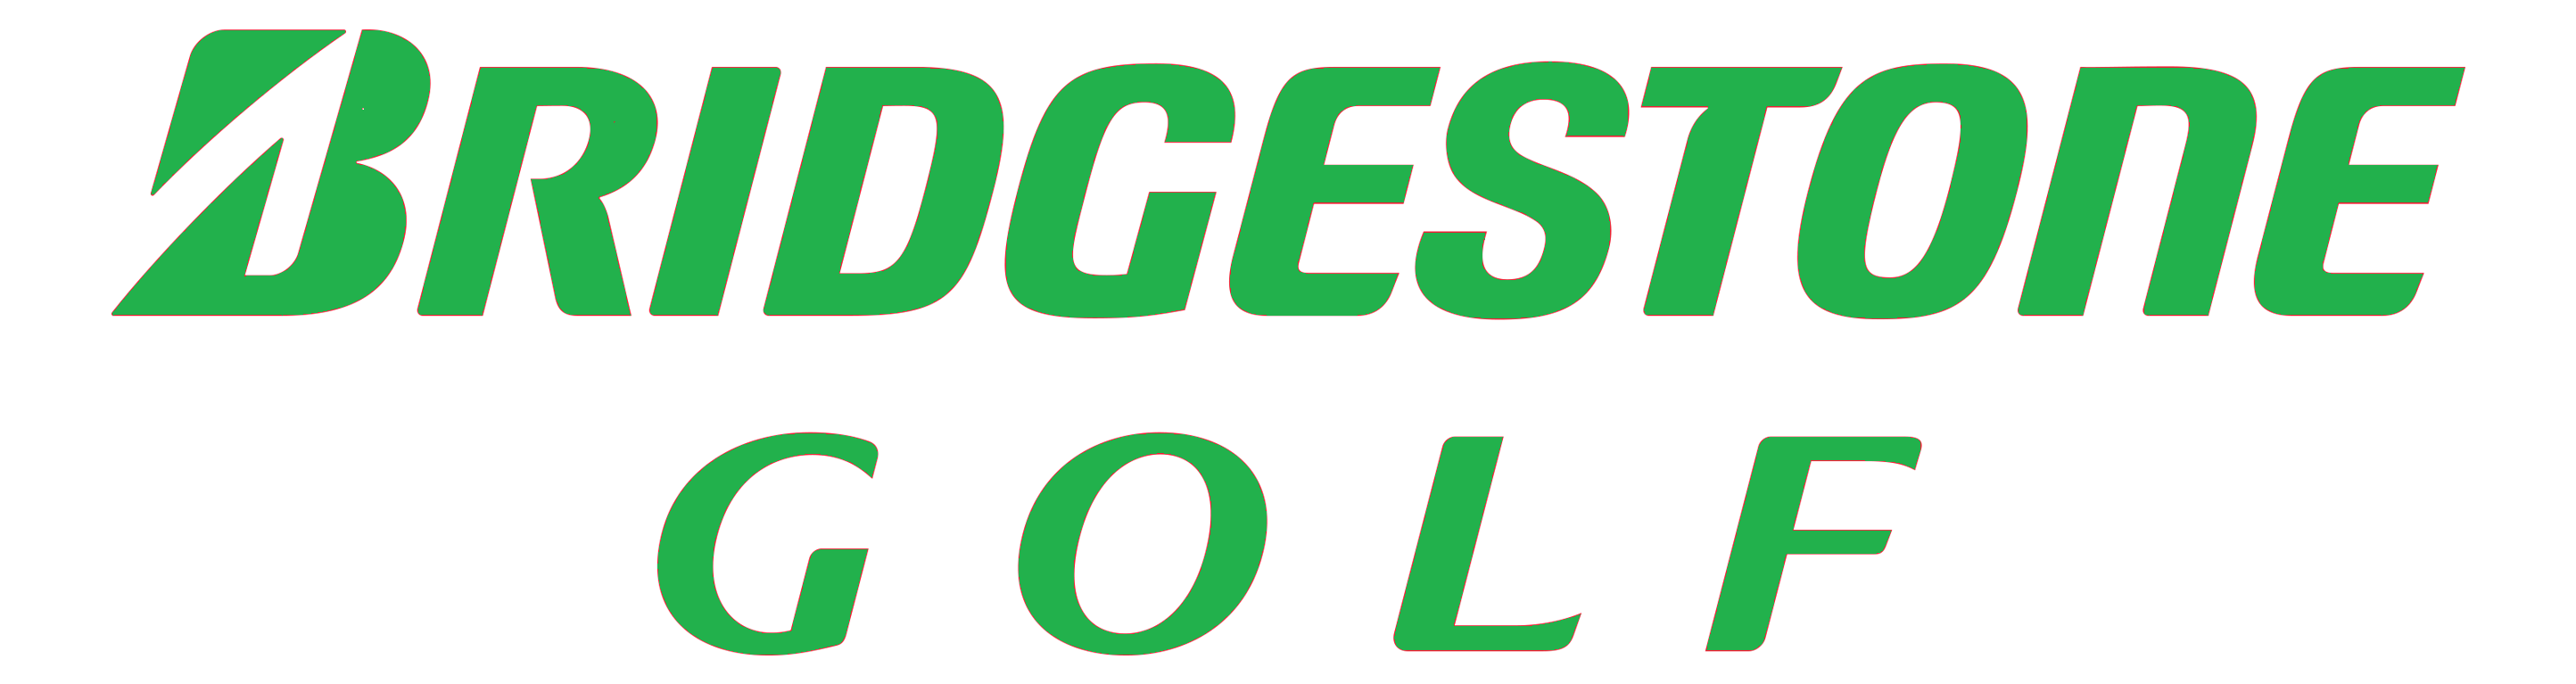 image 2 BSG logo green